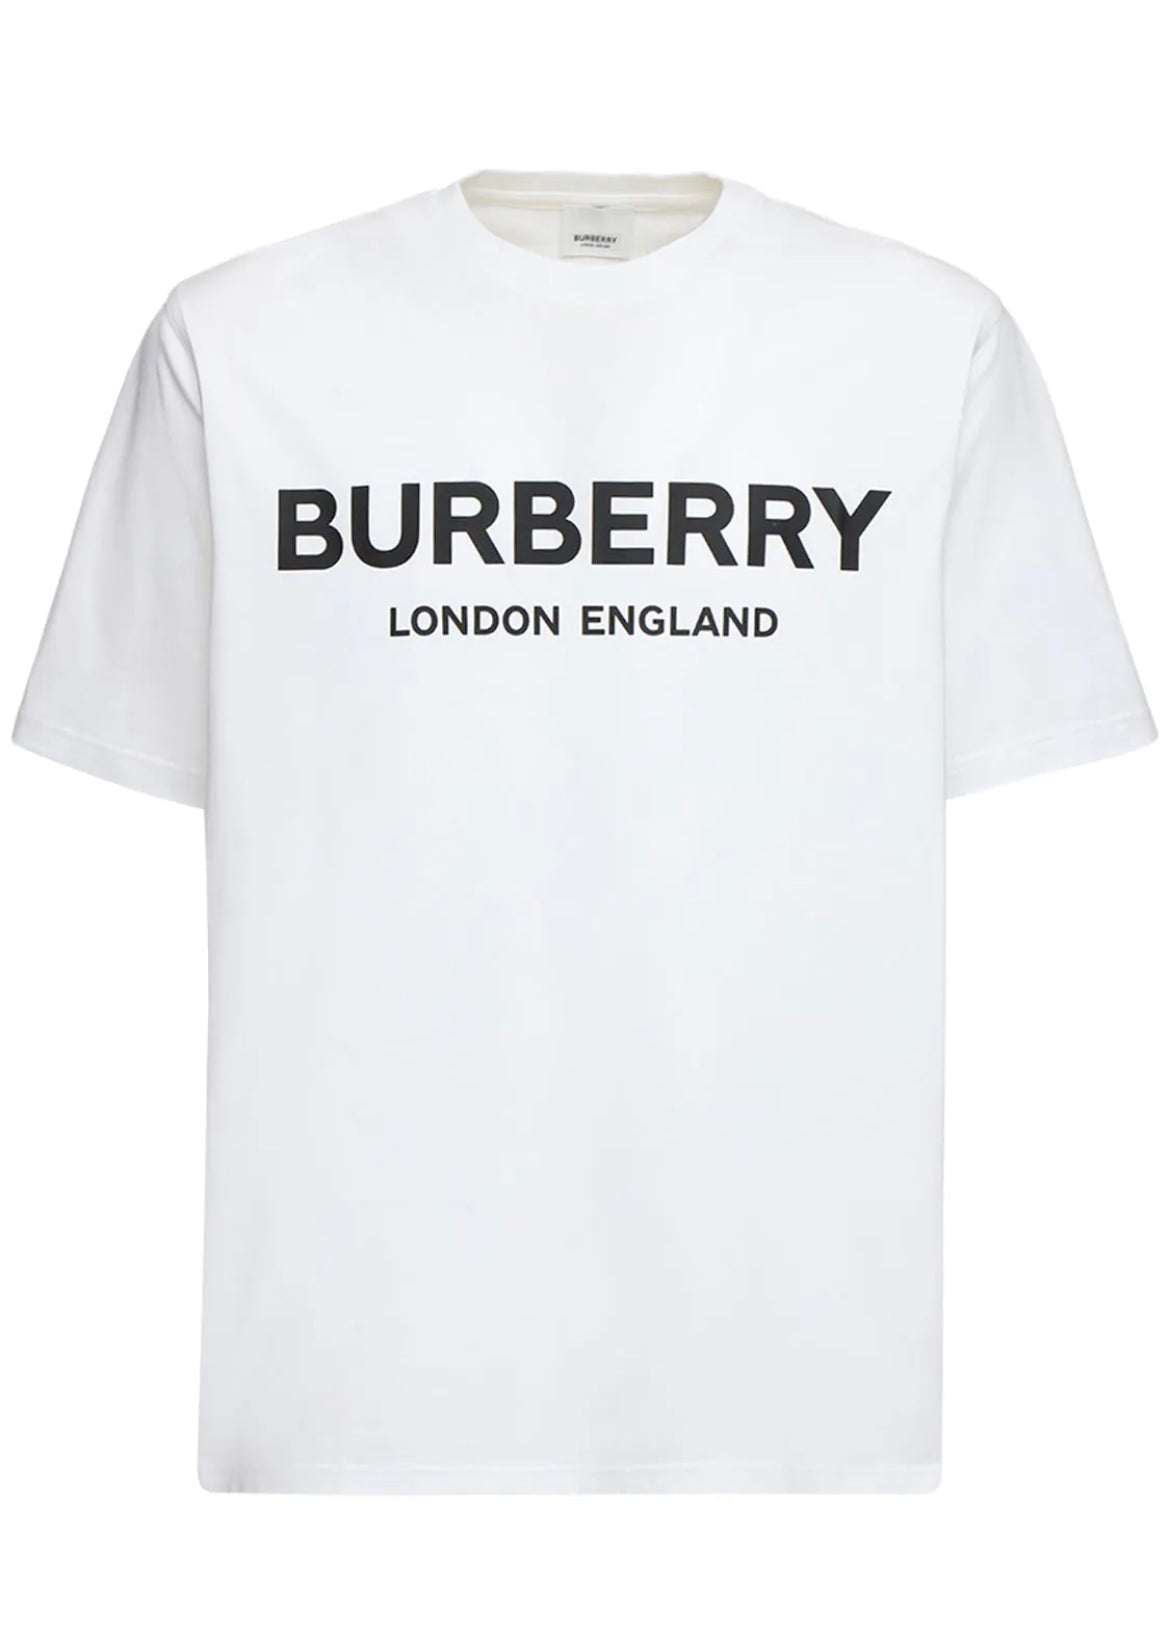 BURBERRY LONDON ENGLAND T-SHIRT & BURBERRY SHORTS FULL SET